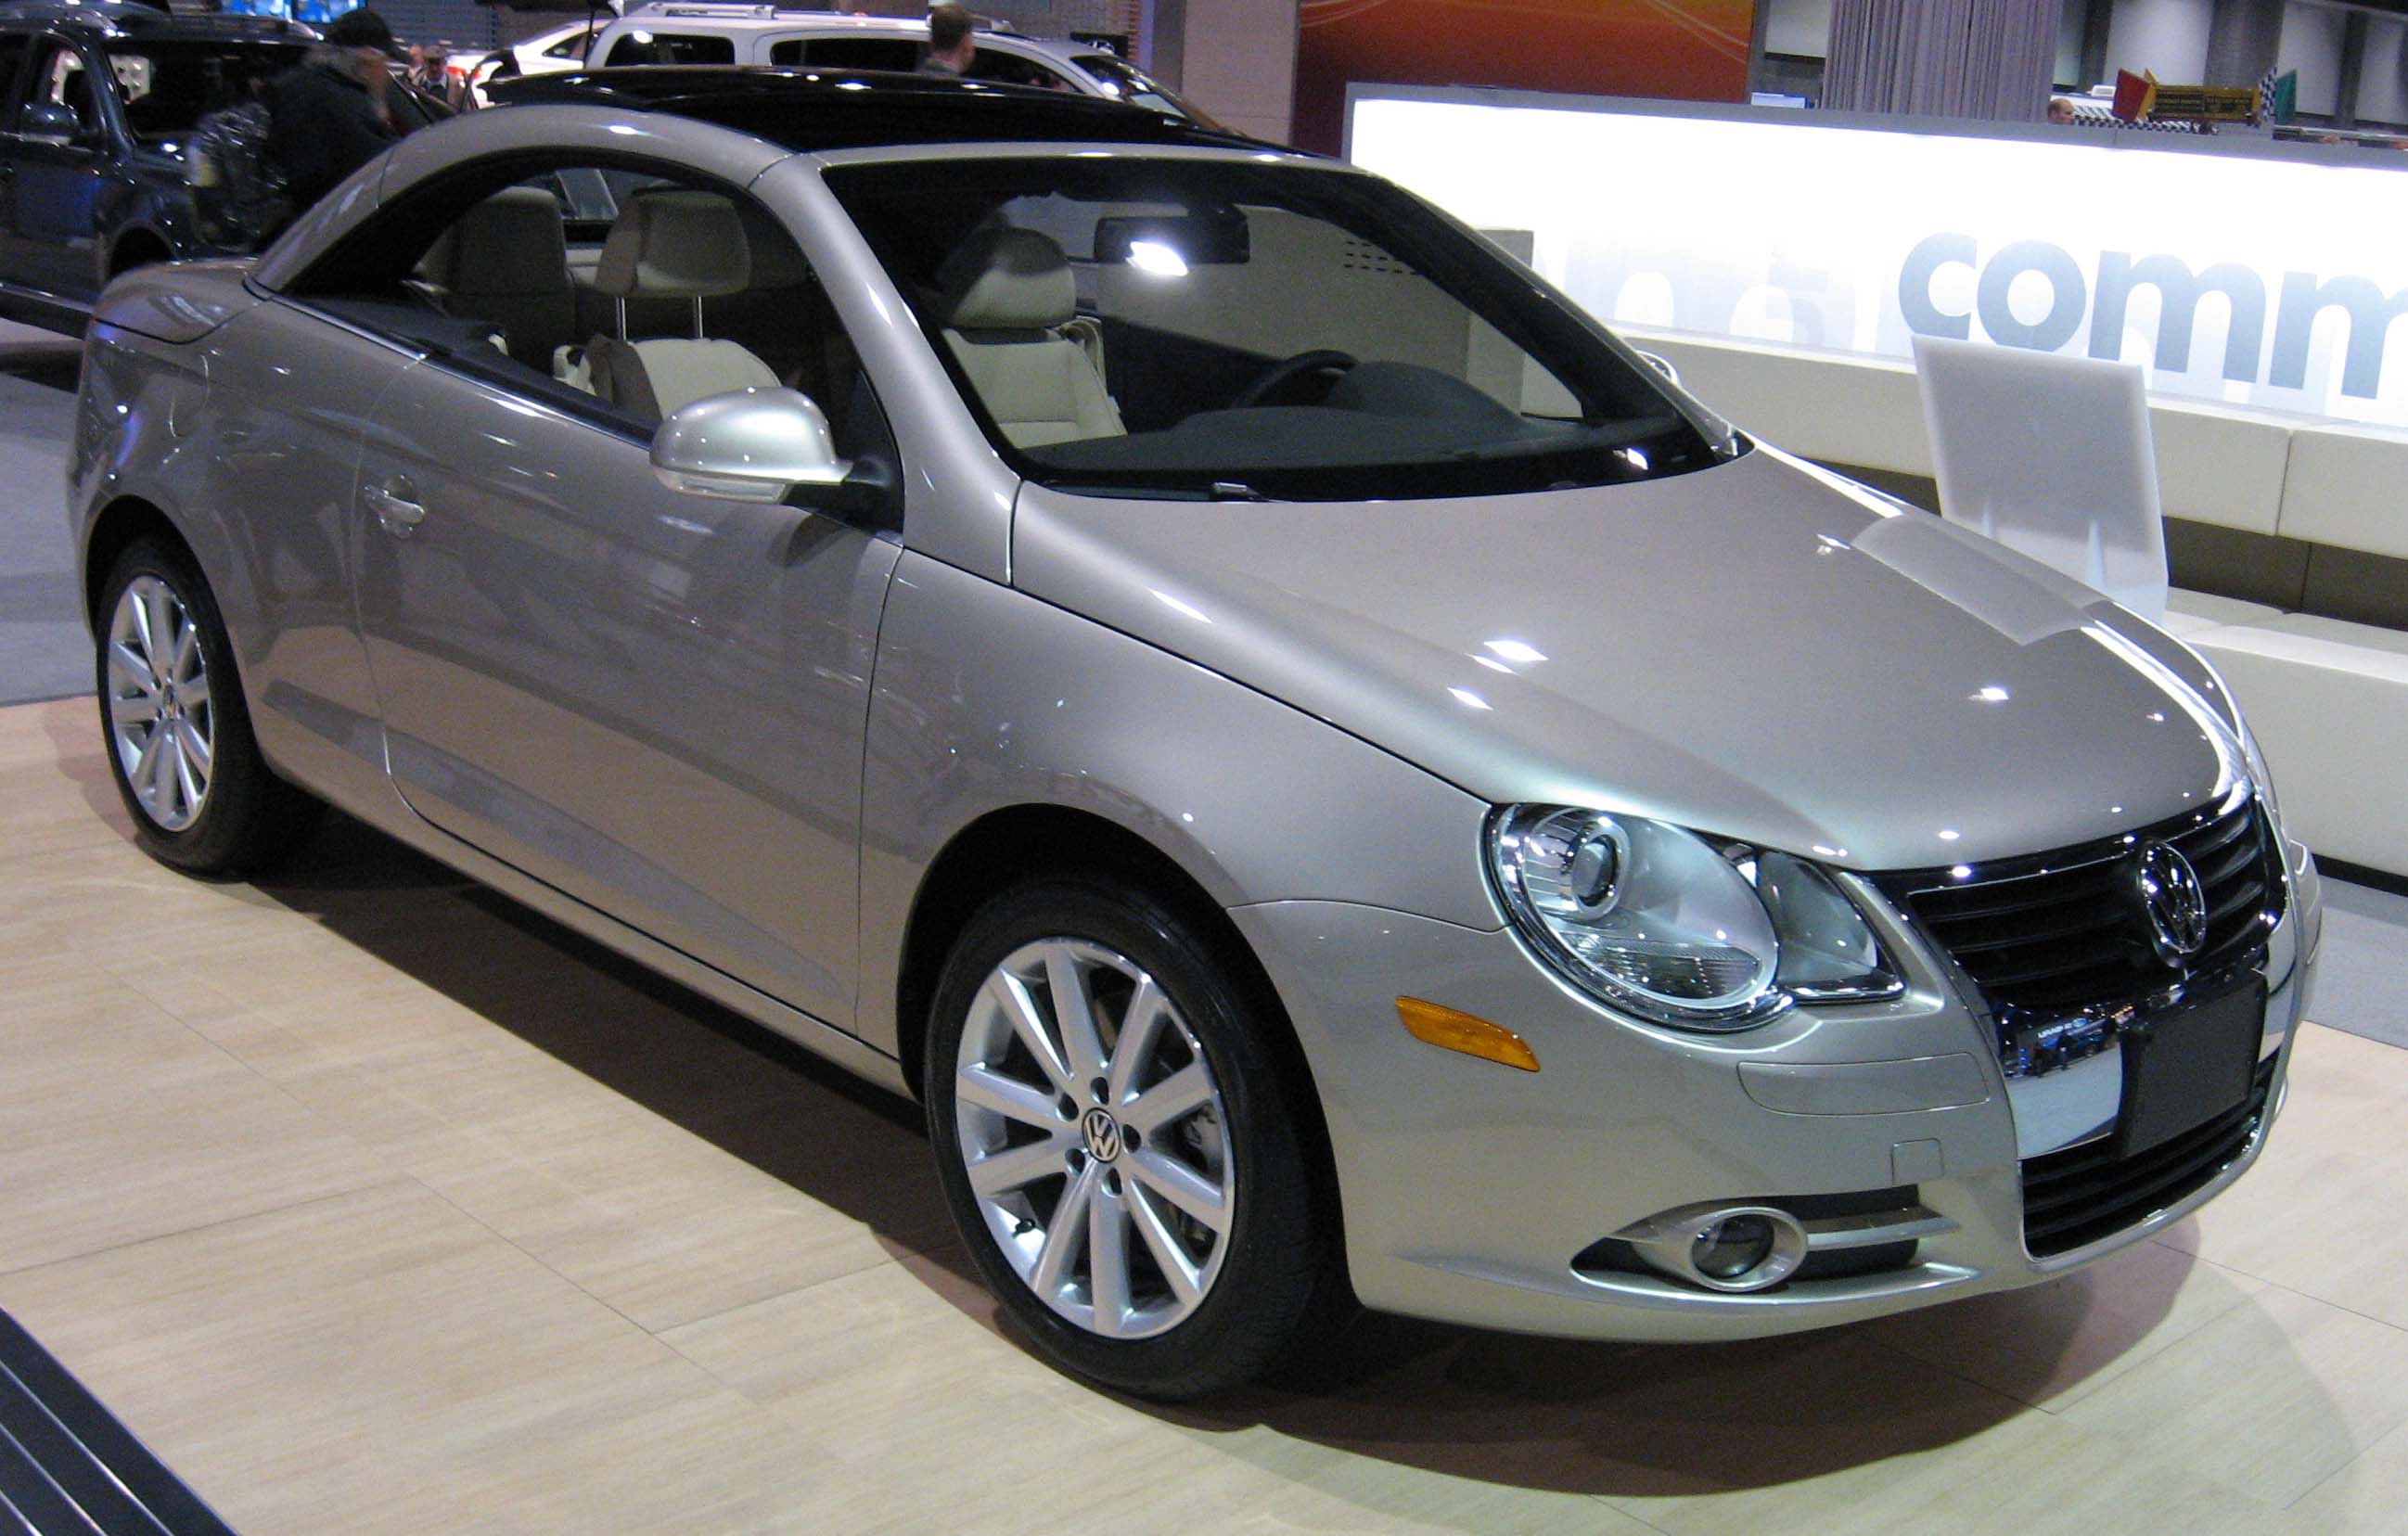 File:2007-Volkswagen-Eos-DC.jpg - Wikimedia Commons